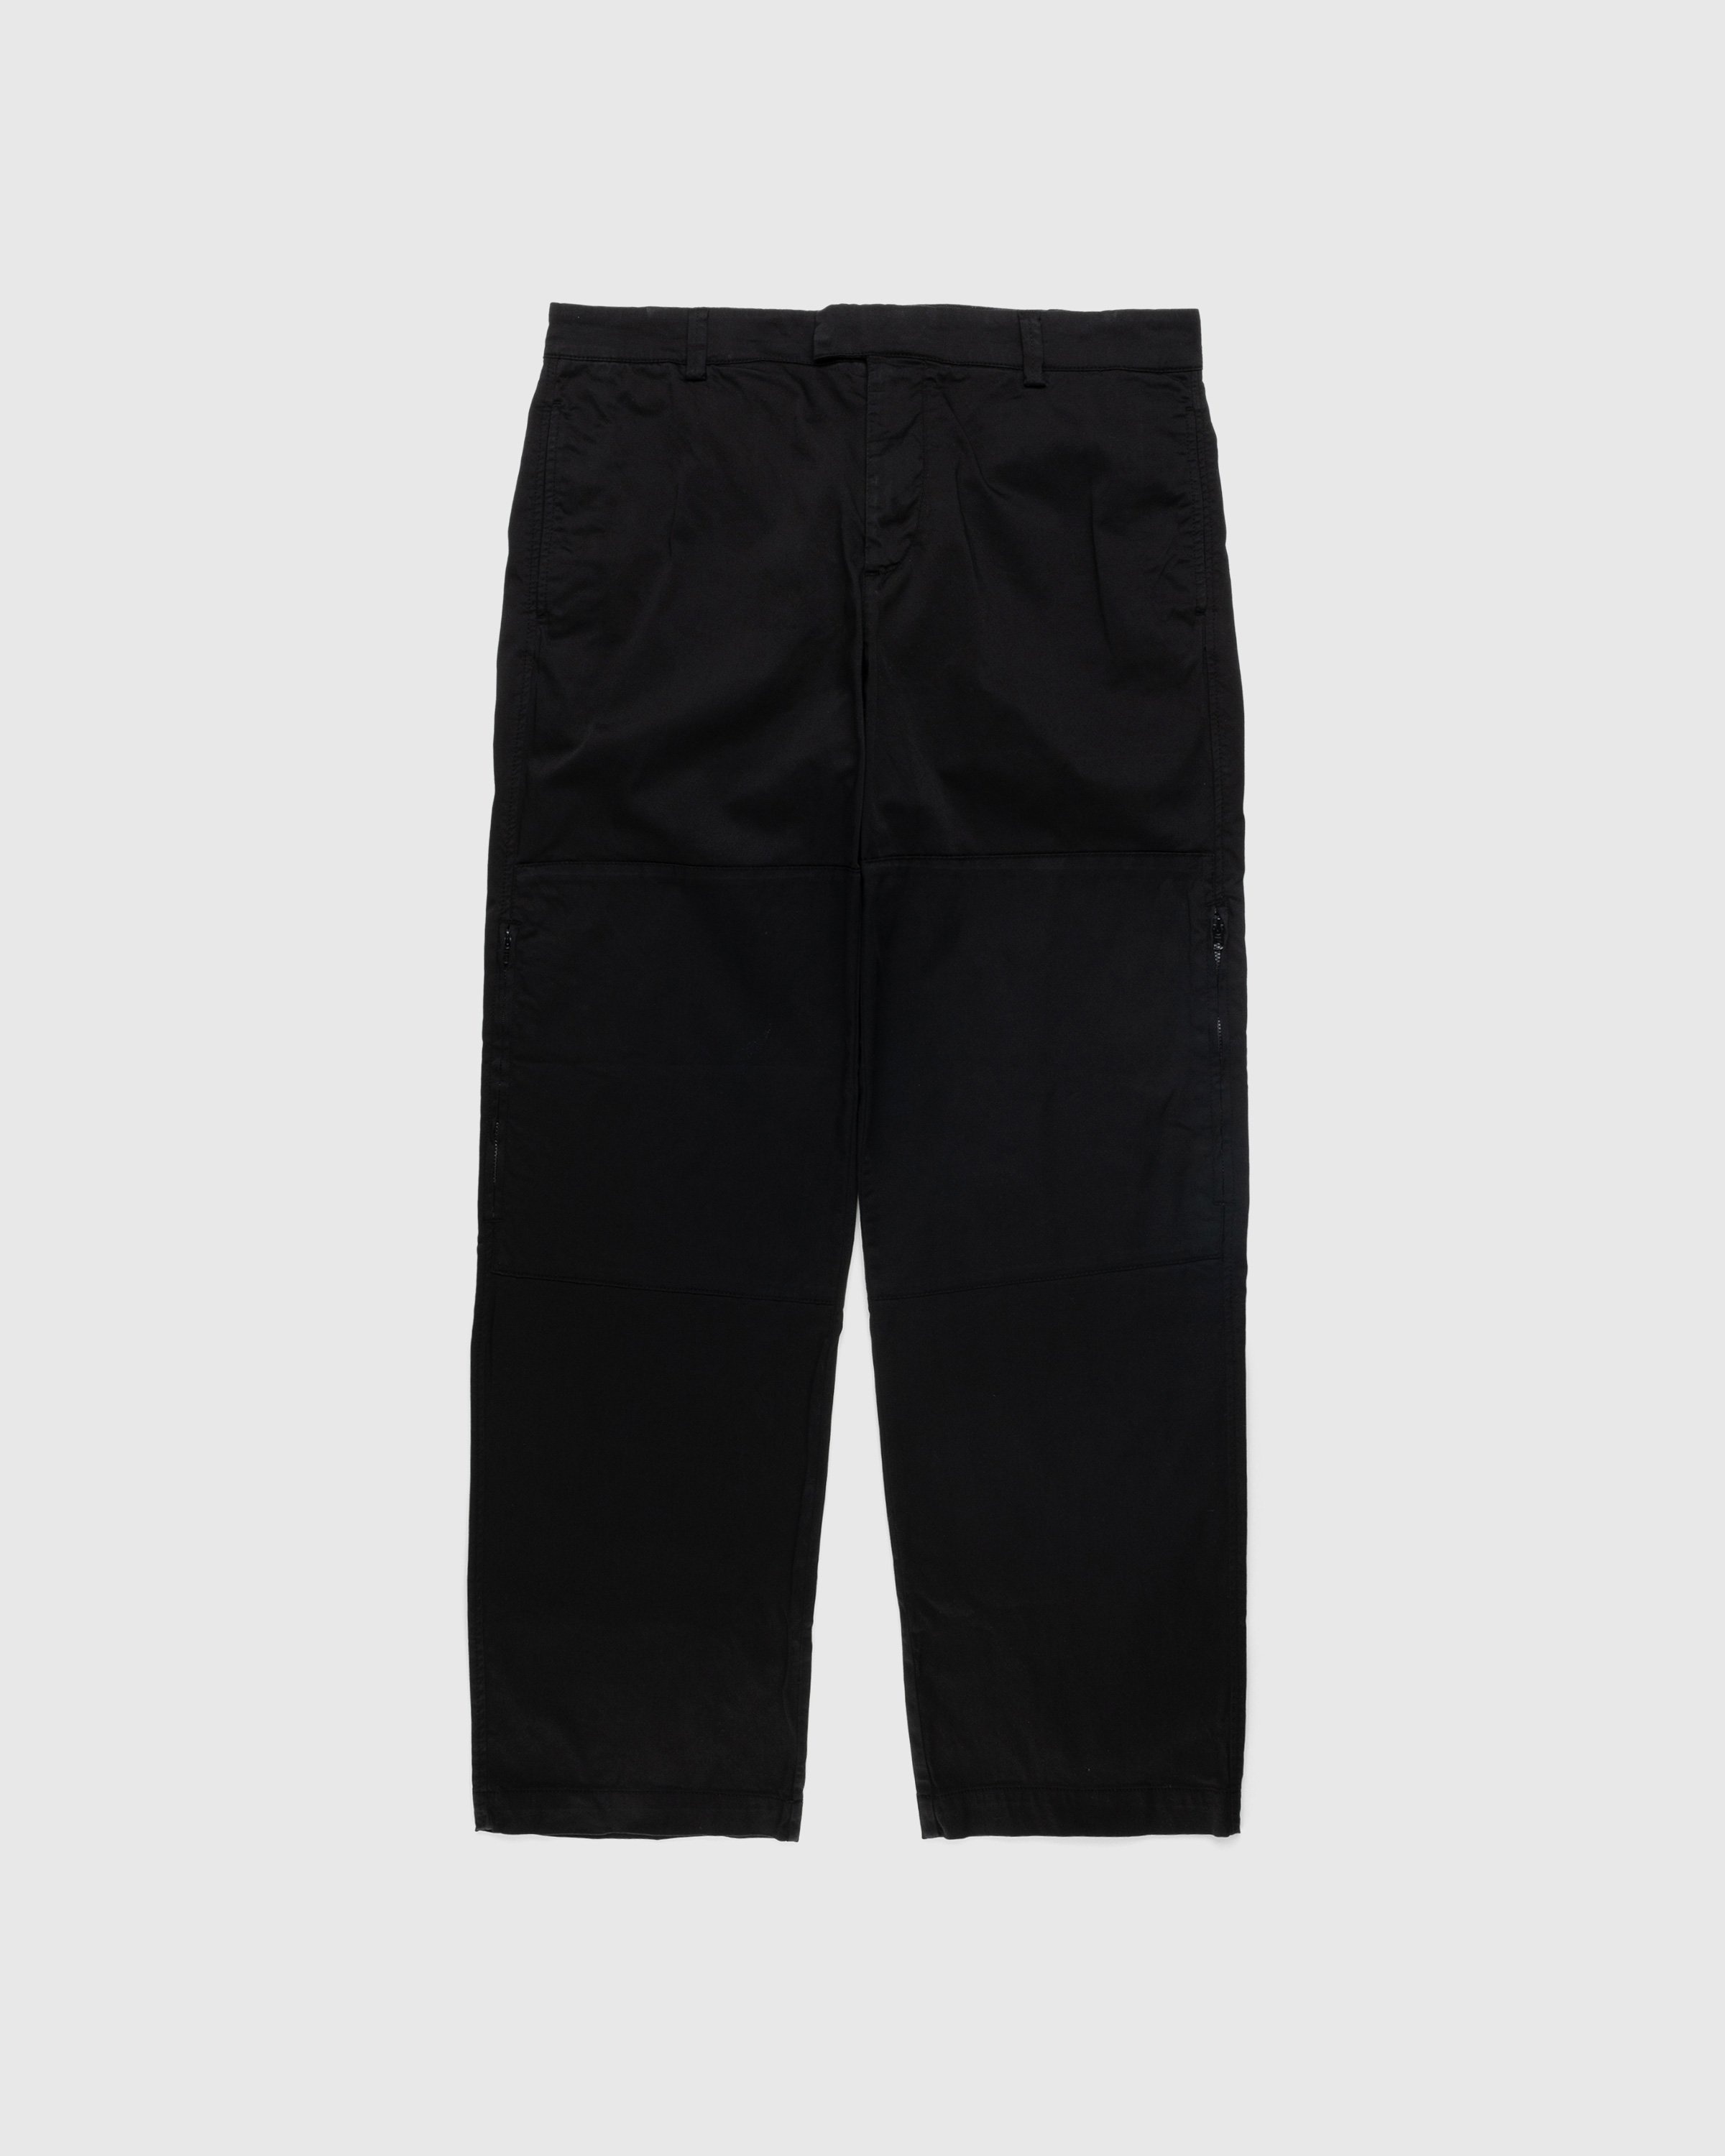 C.P. Company – Stretch Sateen Loose Fit Pants Black - Pants - Black - Image 1